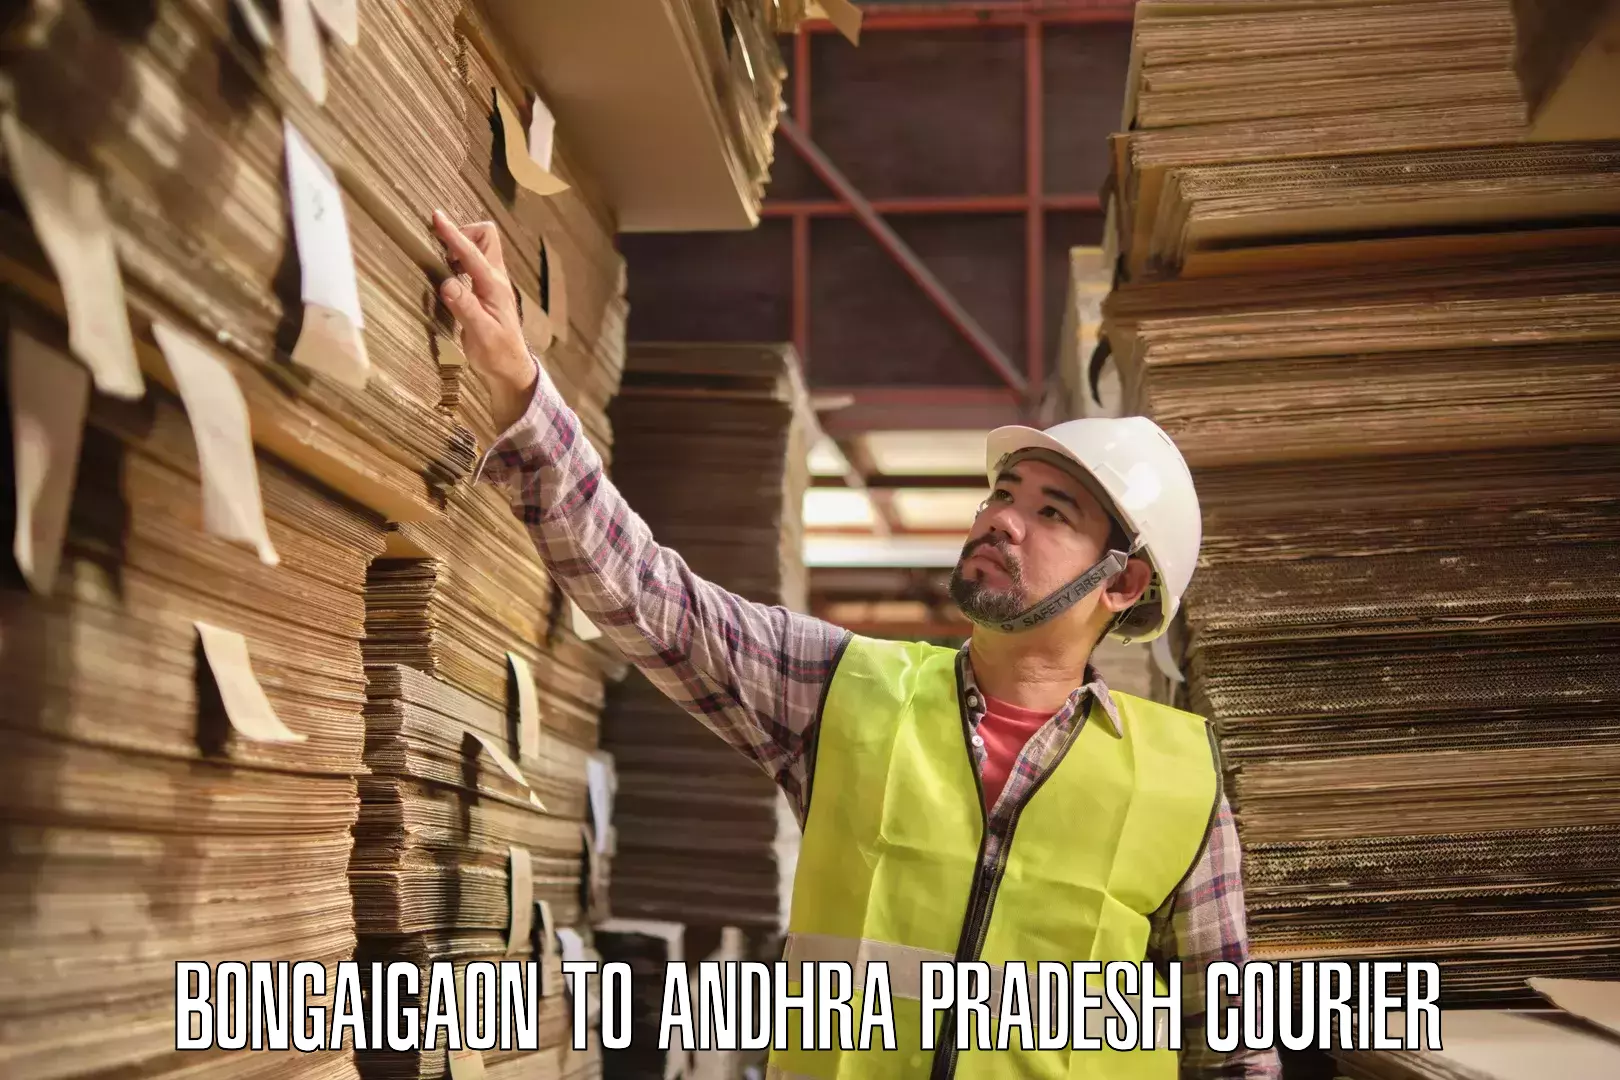 Professional courier handling Bongaigaon to Andhra Pradesh